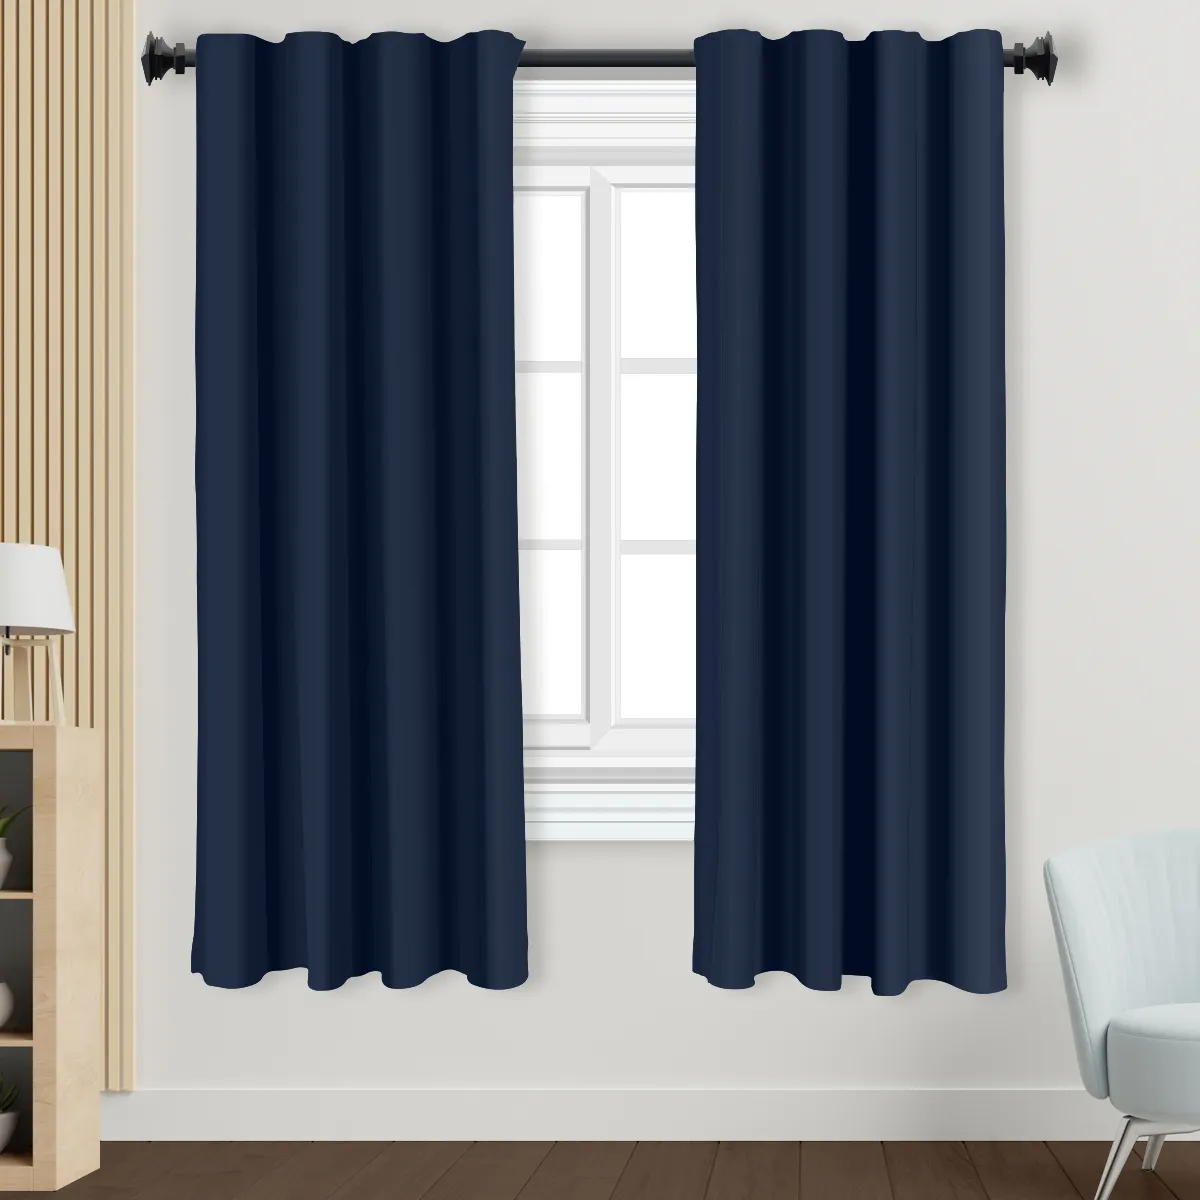 Para cortina ciega de dormitorio, cortinas de ventana de 96 pulgadas, tela tejida, moda moderna, opaca larga, tul para el hogar, textura de poliéster 100%